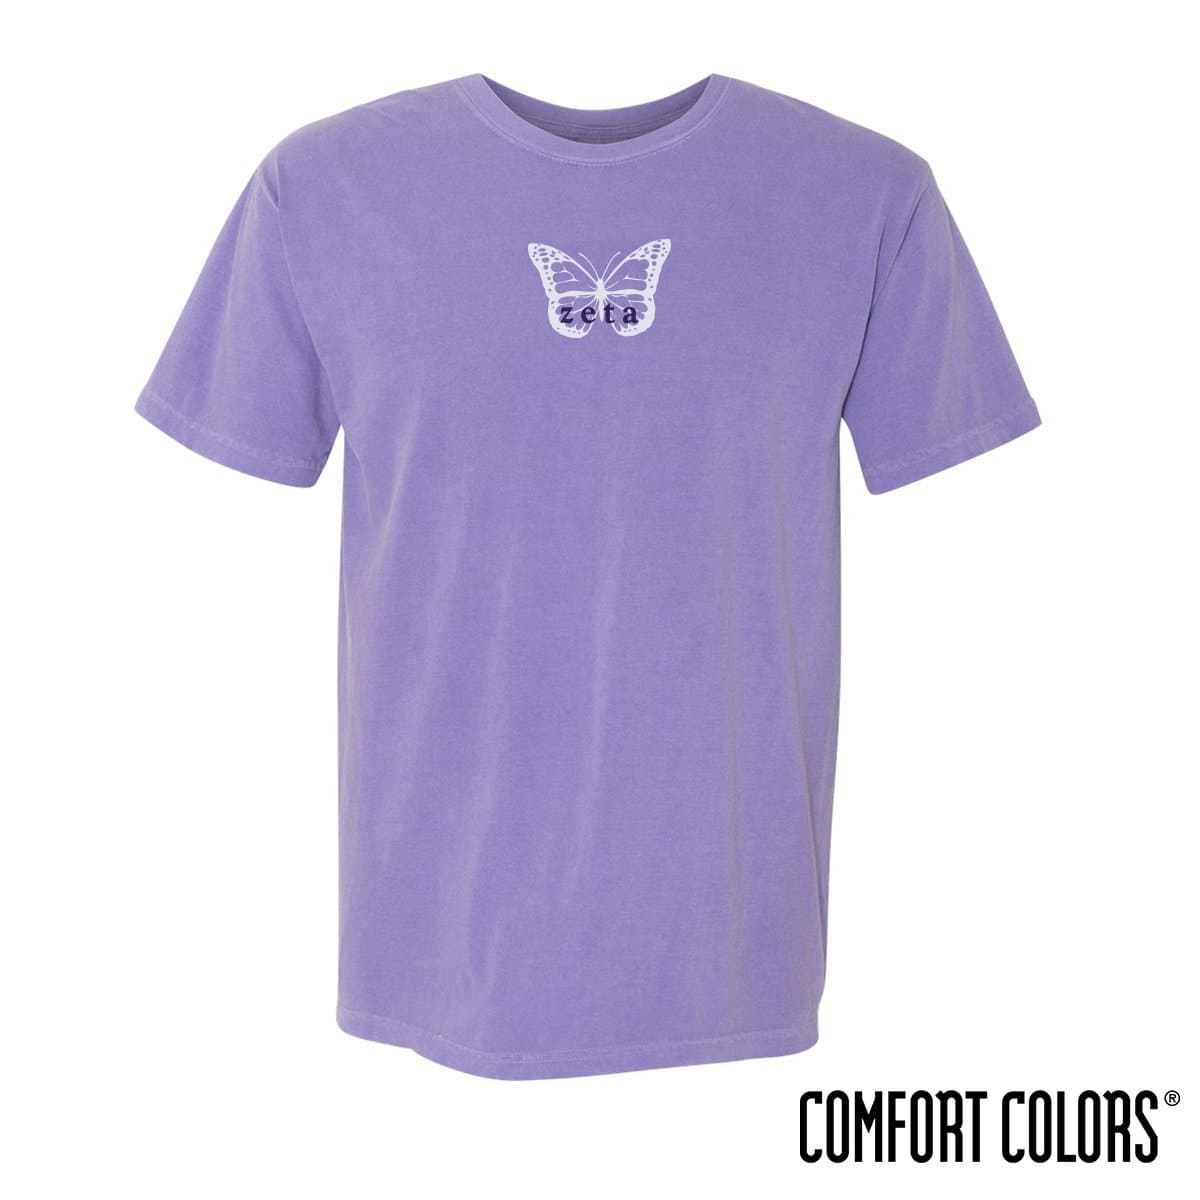 Zeta Comfort Colors Purple Butterfly Tee | Zeta Tau Alpha | Shirts > Short sleeve t-shirts